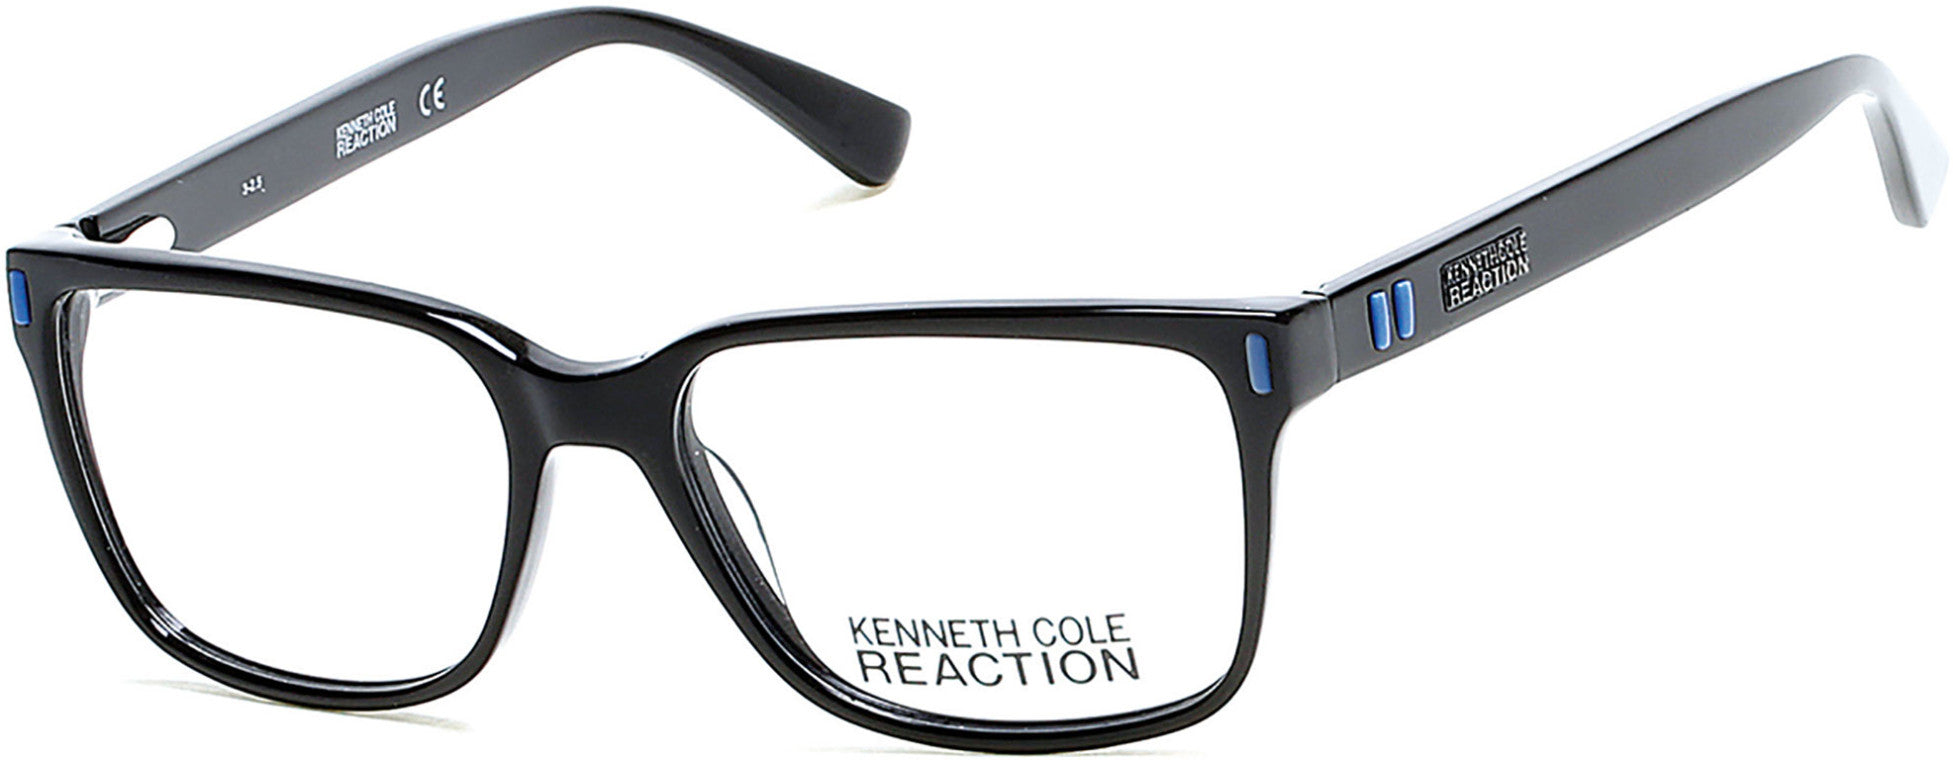 Kenneth Cole New York,Kenneth Cole Reaction KC0786 Geometric Eyeglasses 001-001 - Shiny Black